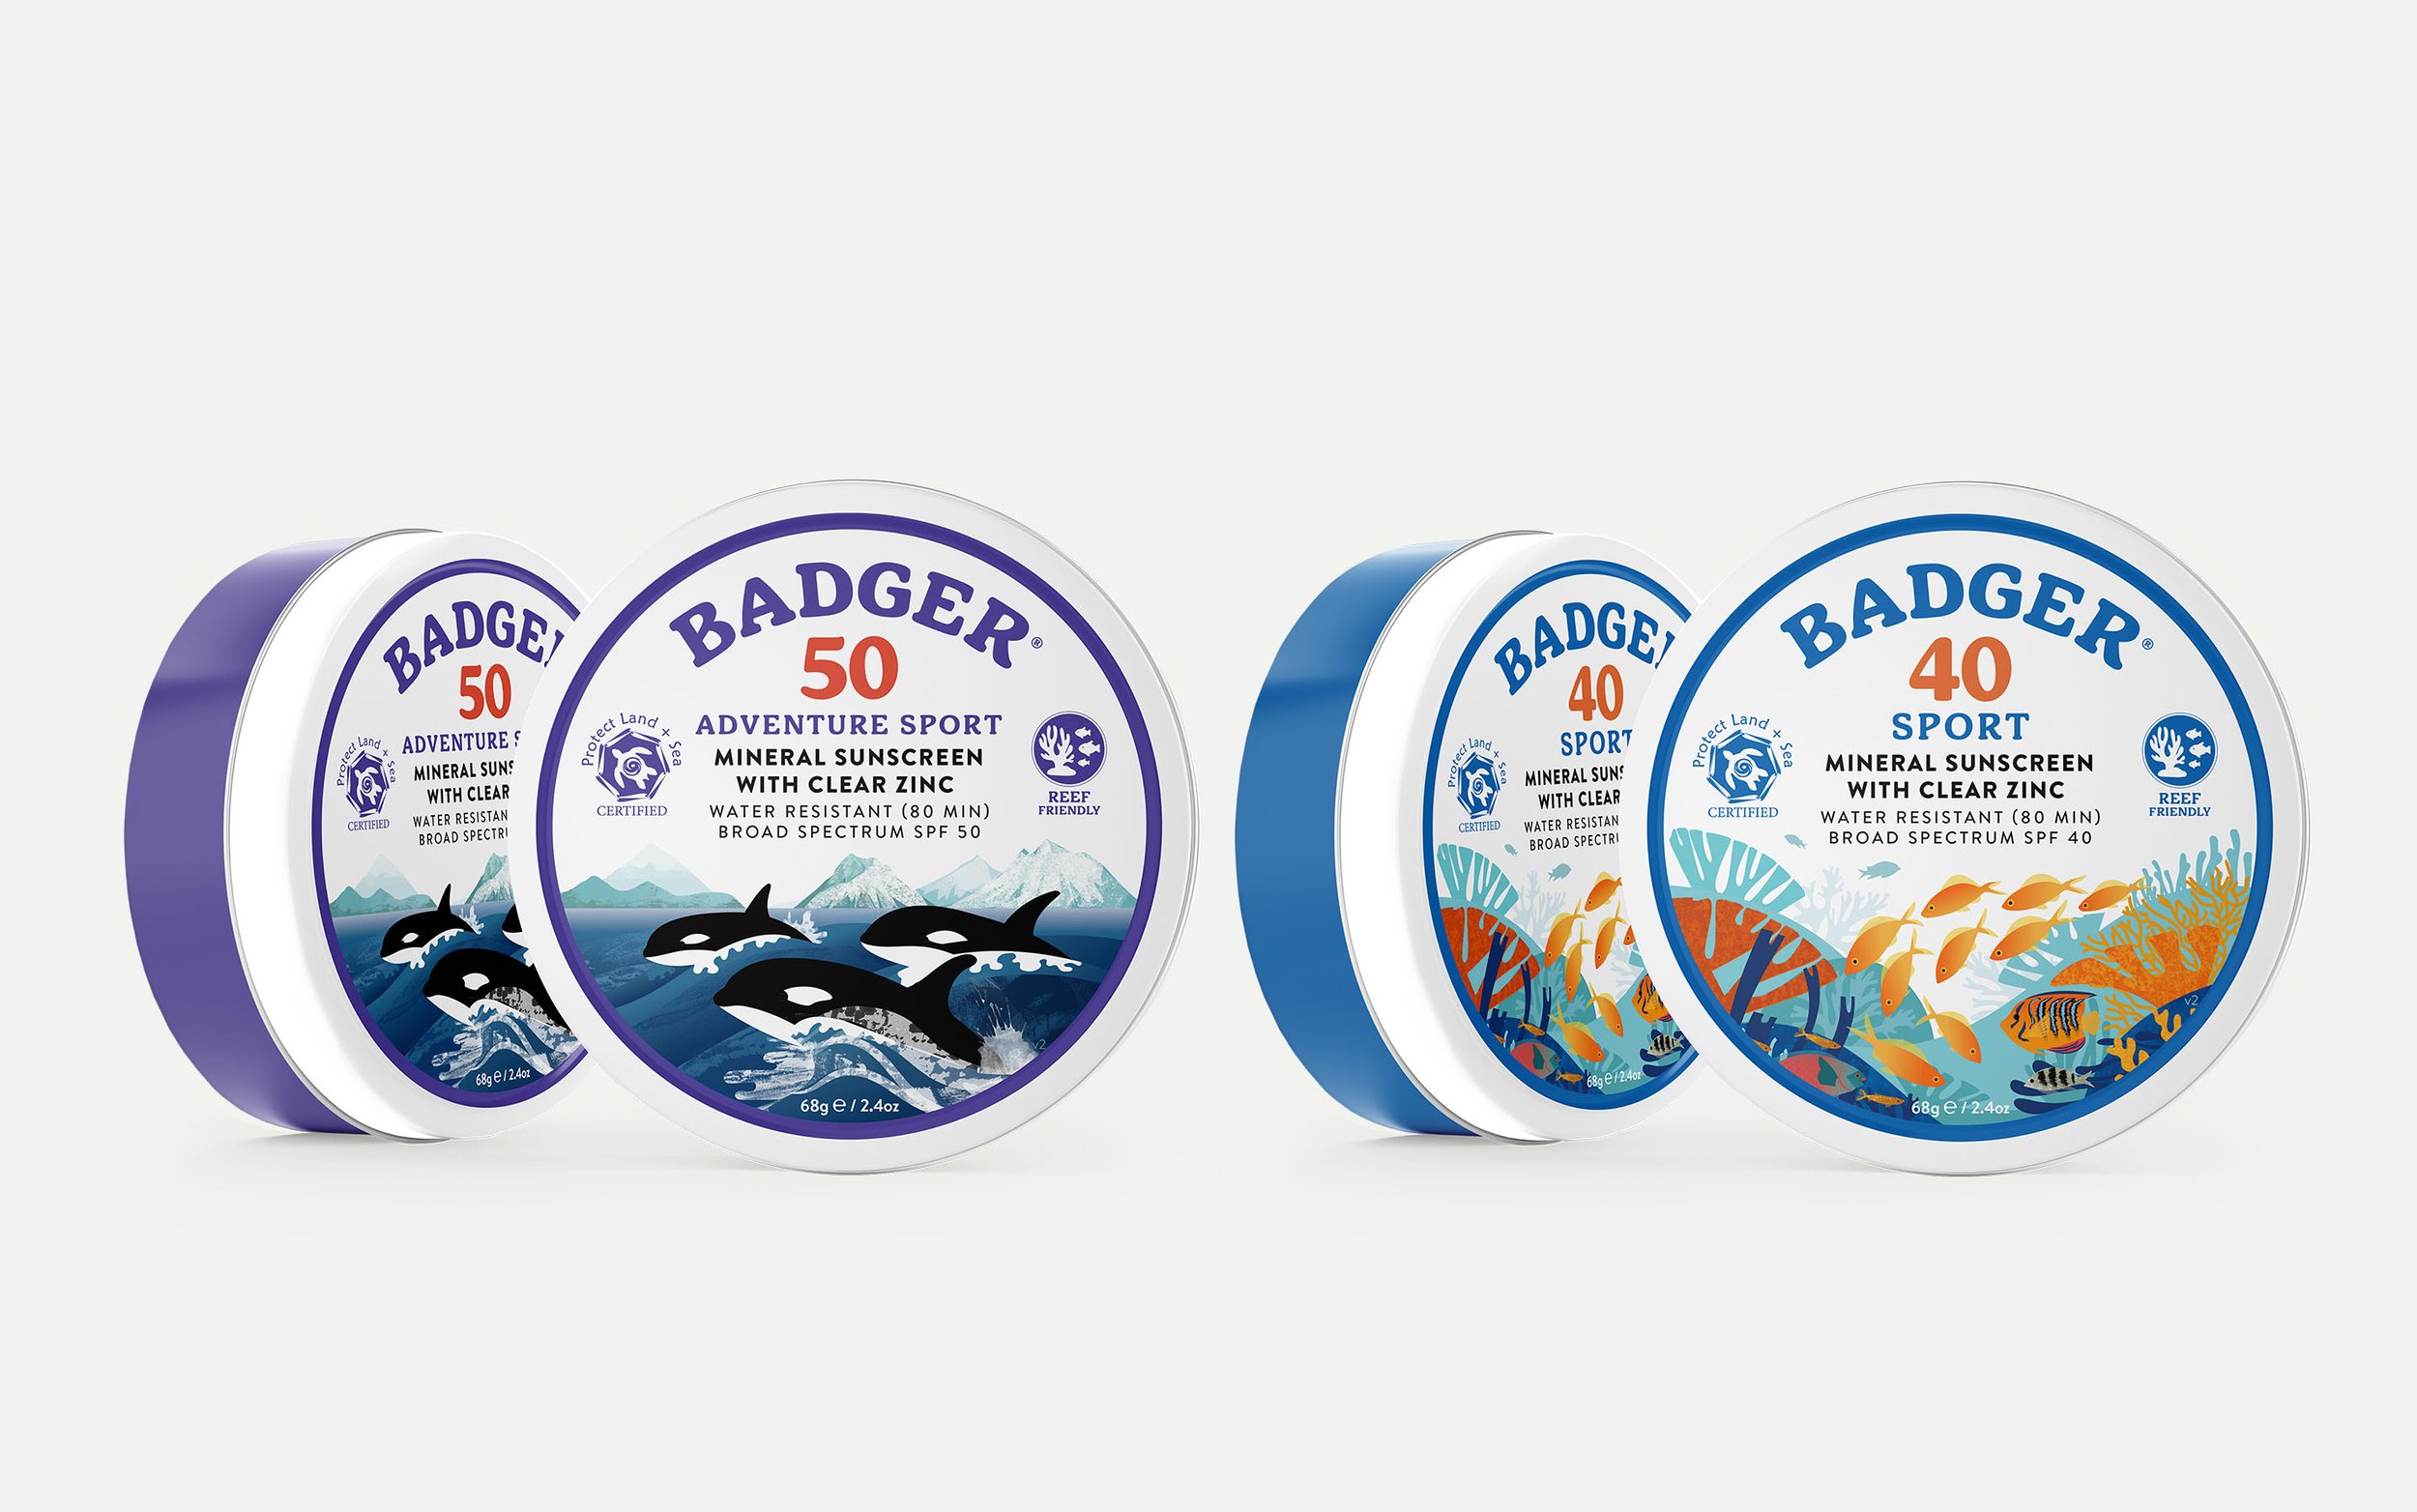 Badger-Packaging-7.jpg